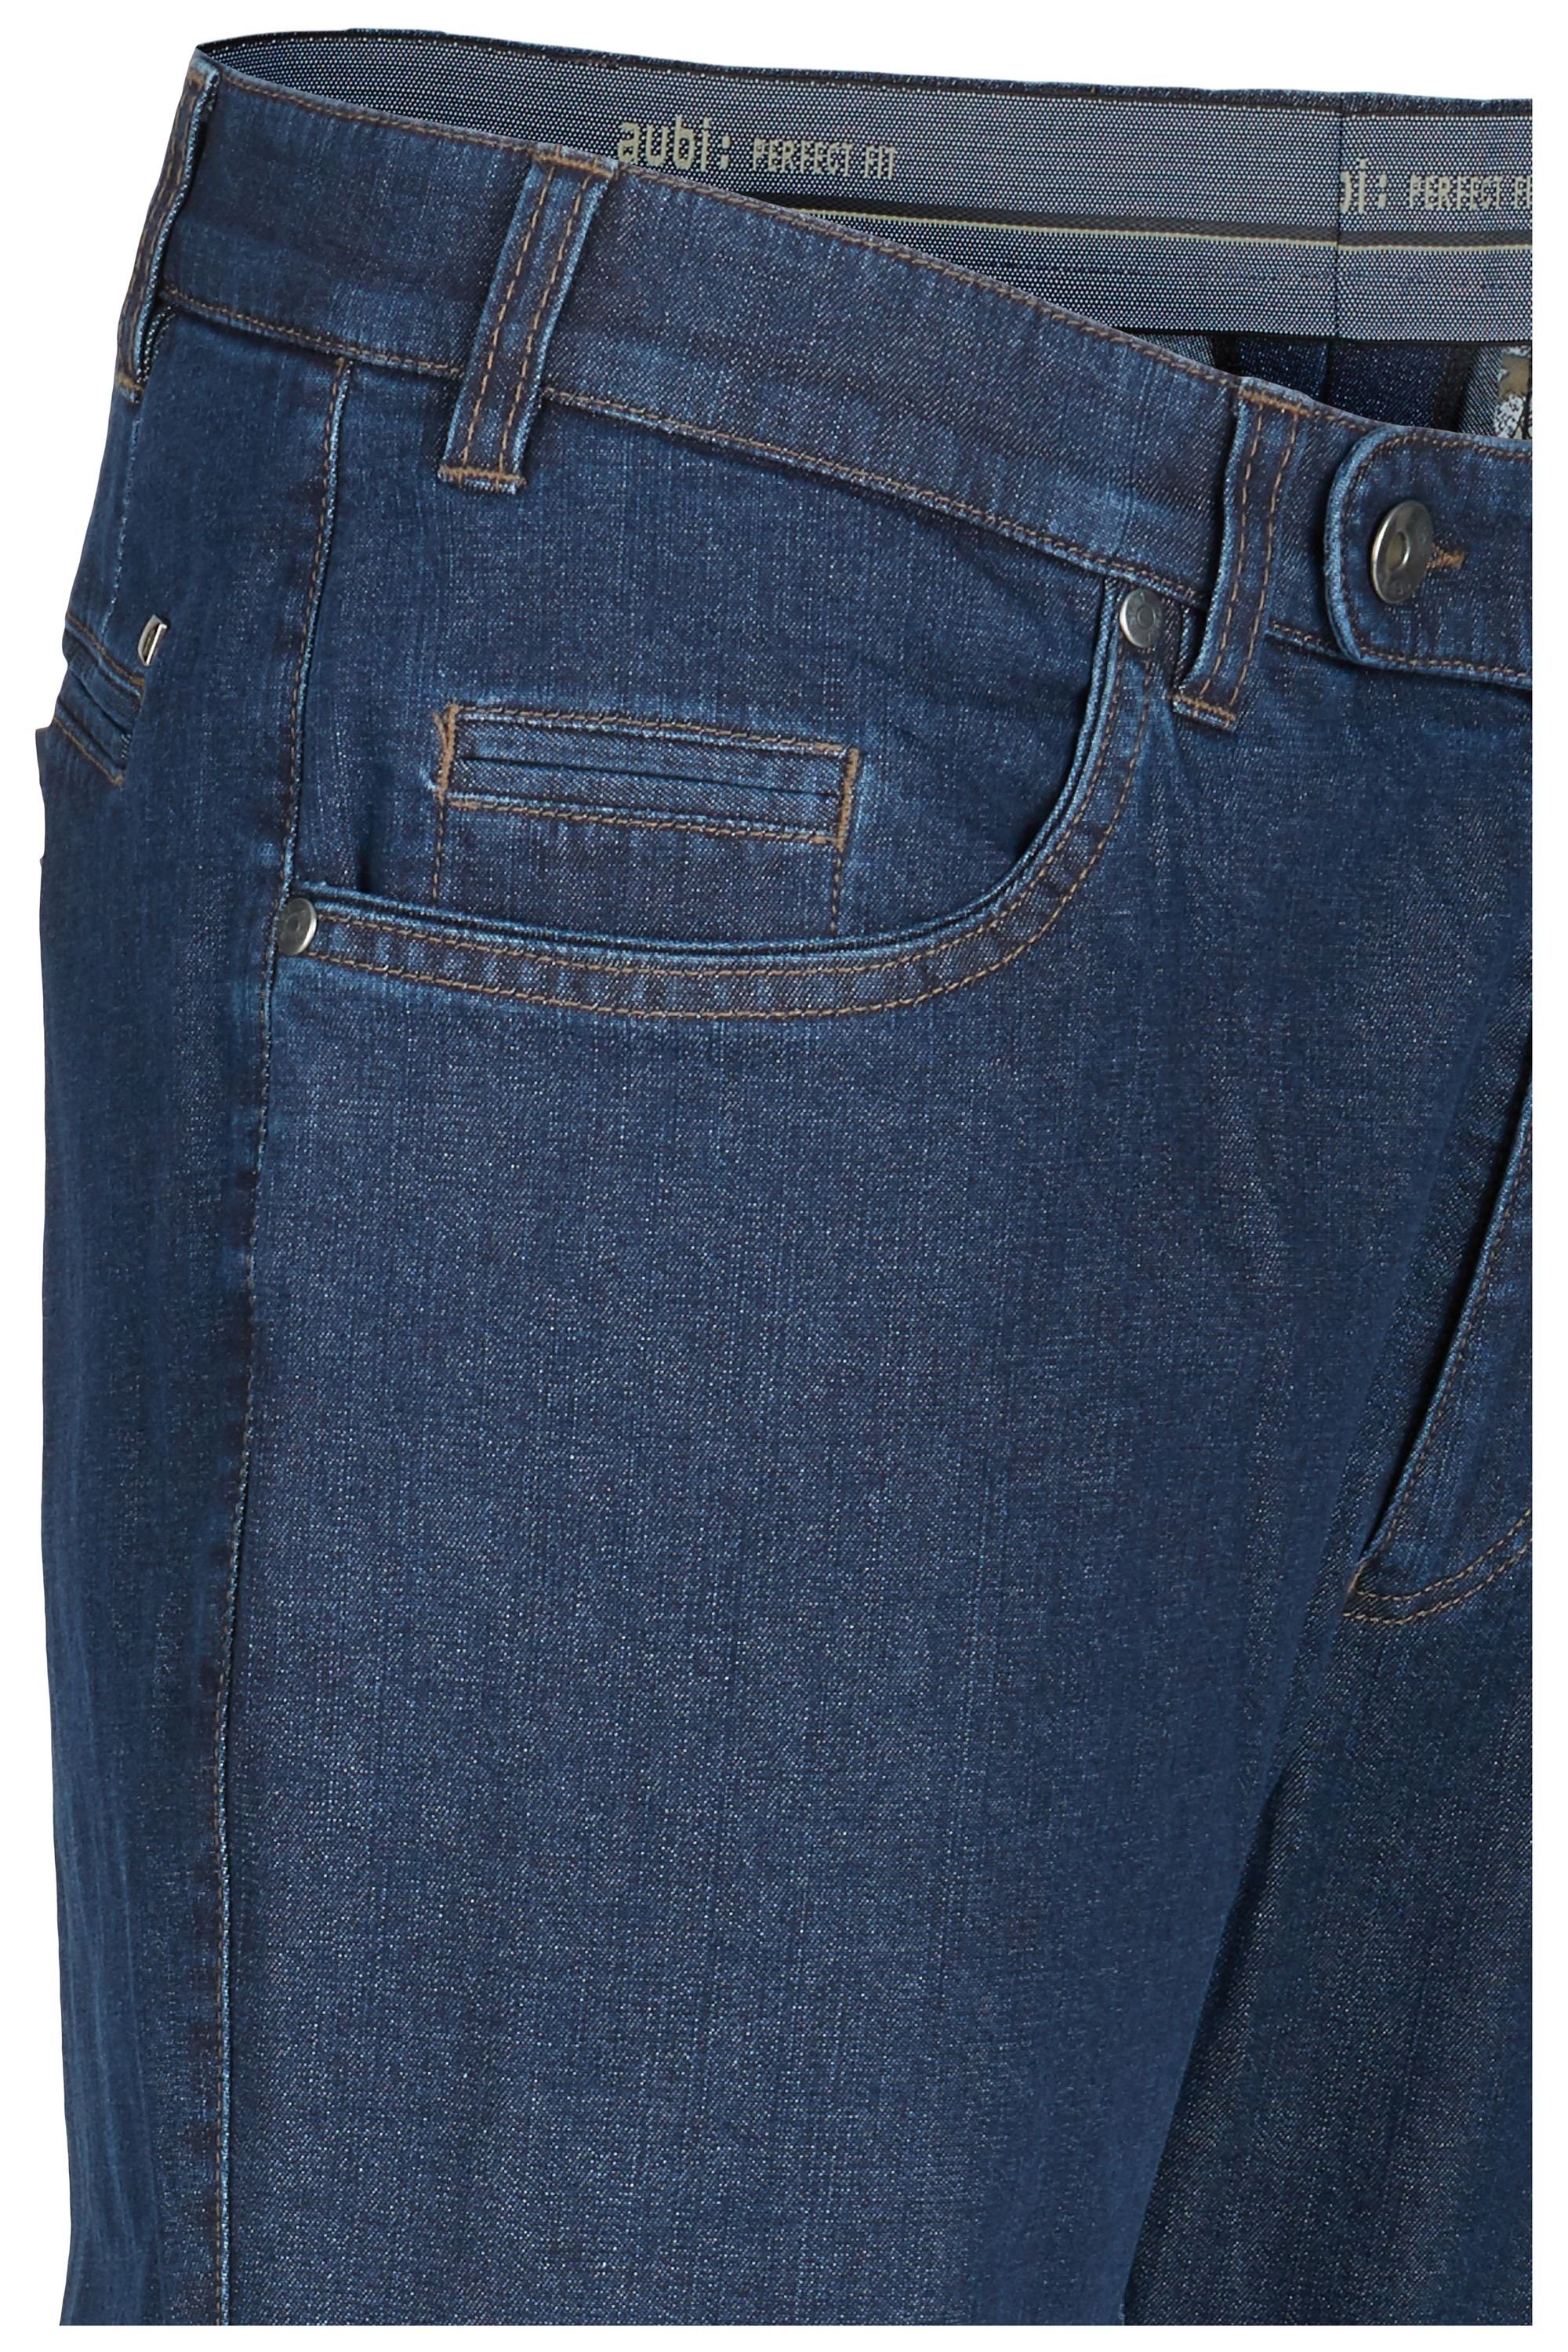 aubi Stretch Jeans Jeans Fit aubi: Hose (46) 577 Perfect Modell stone Bequeme Herren